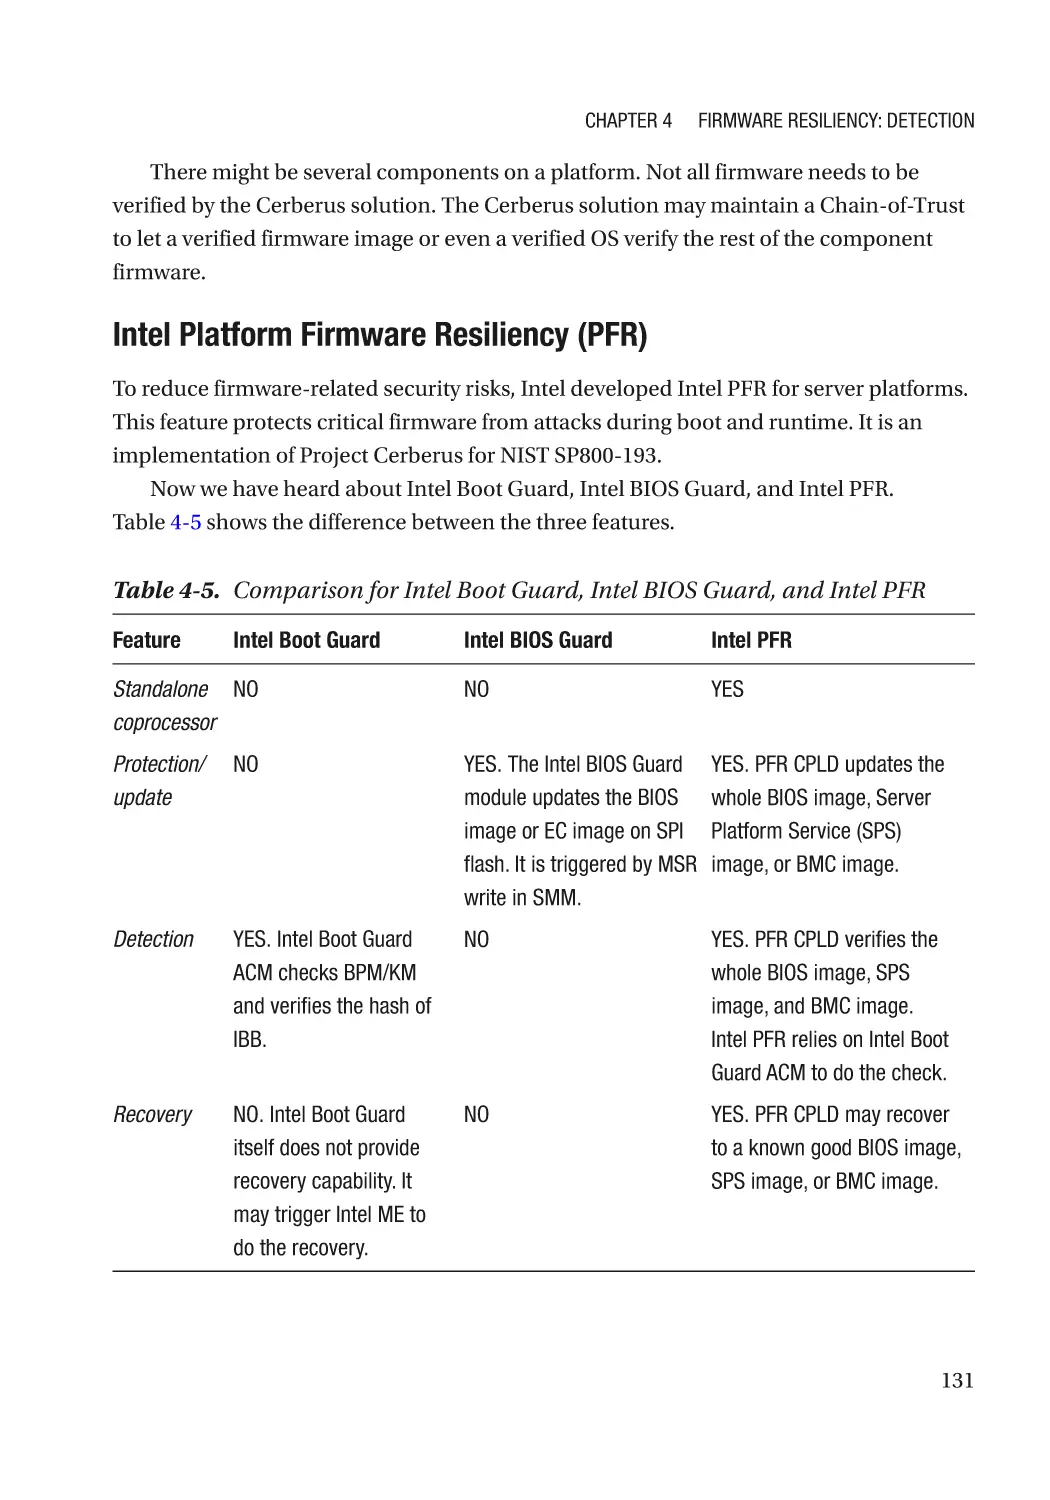 Intel Platform Firmware Resiliency (PFR)